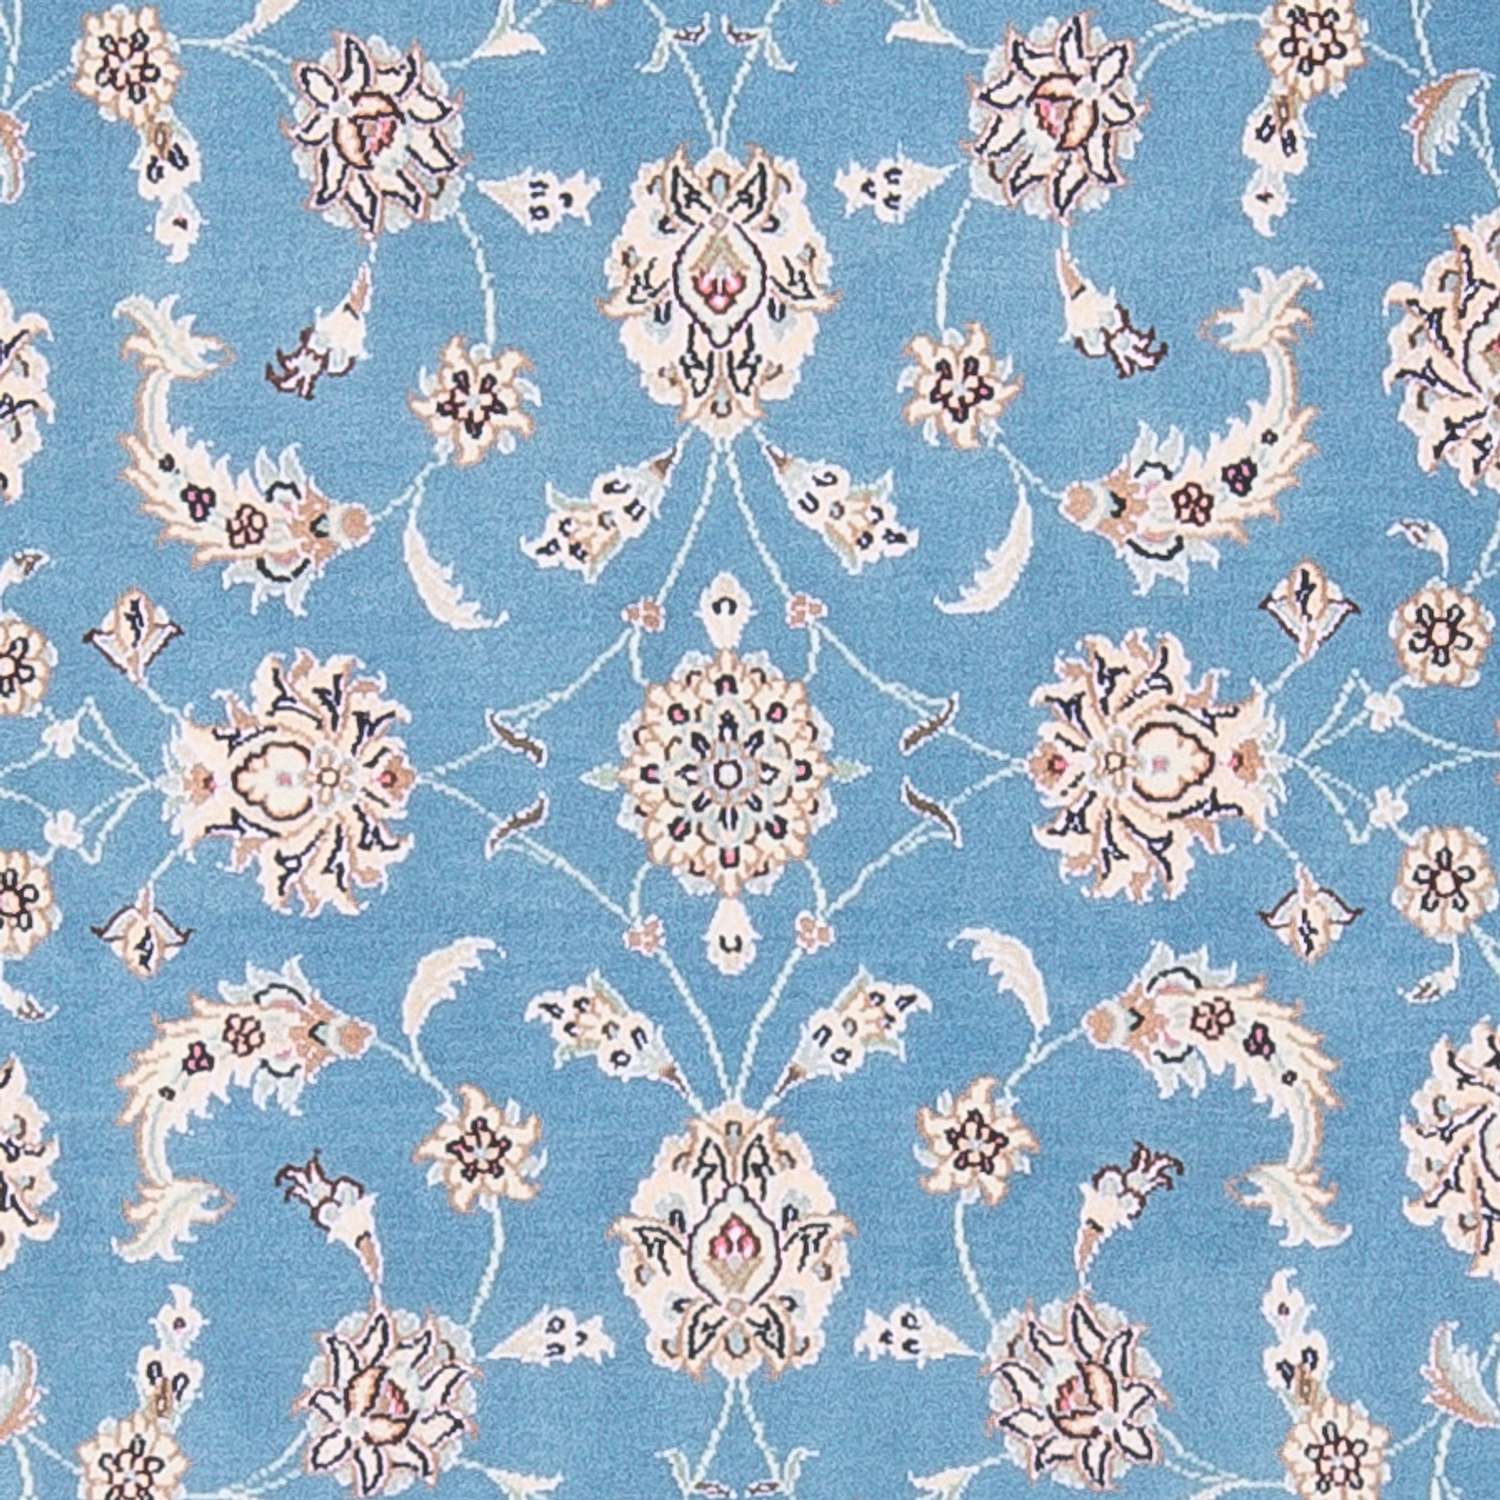 Persisk matta - Nain - Premium - 160 x 108 cm - blå